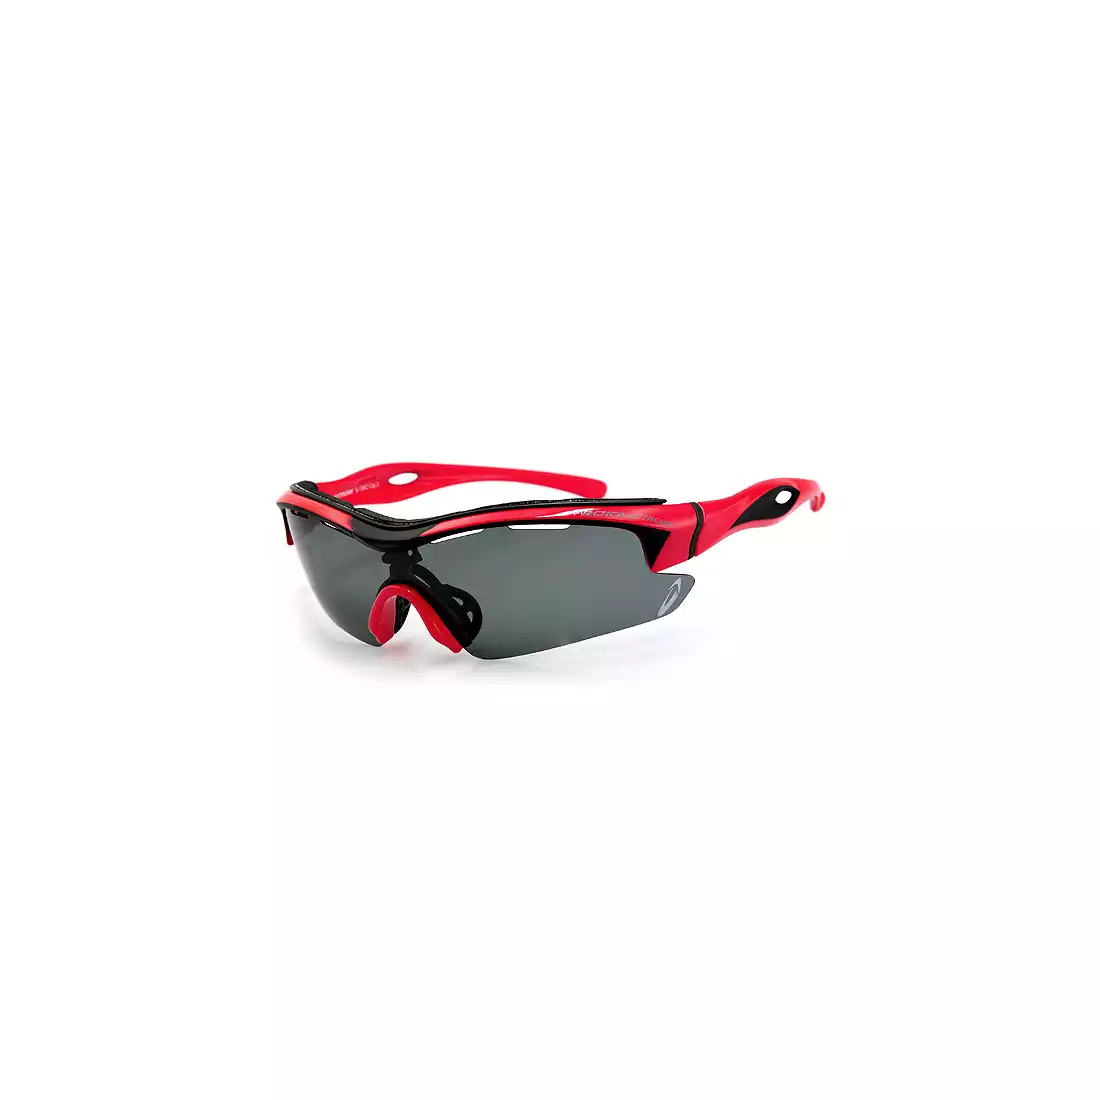 ARCTICA okulary sportowe, S 156 C